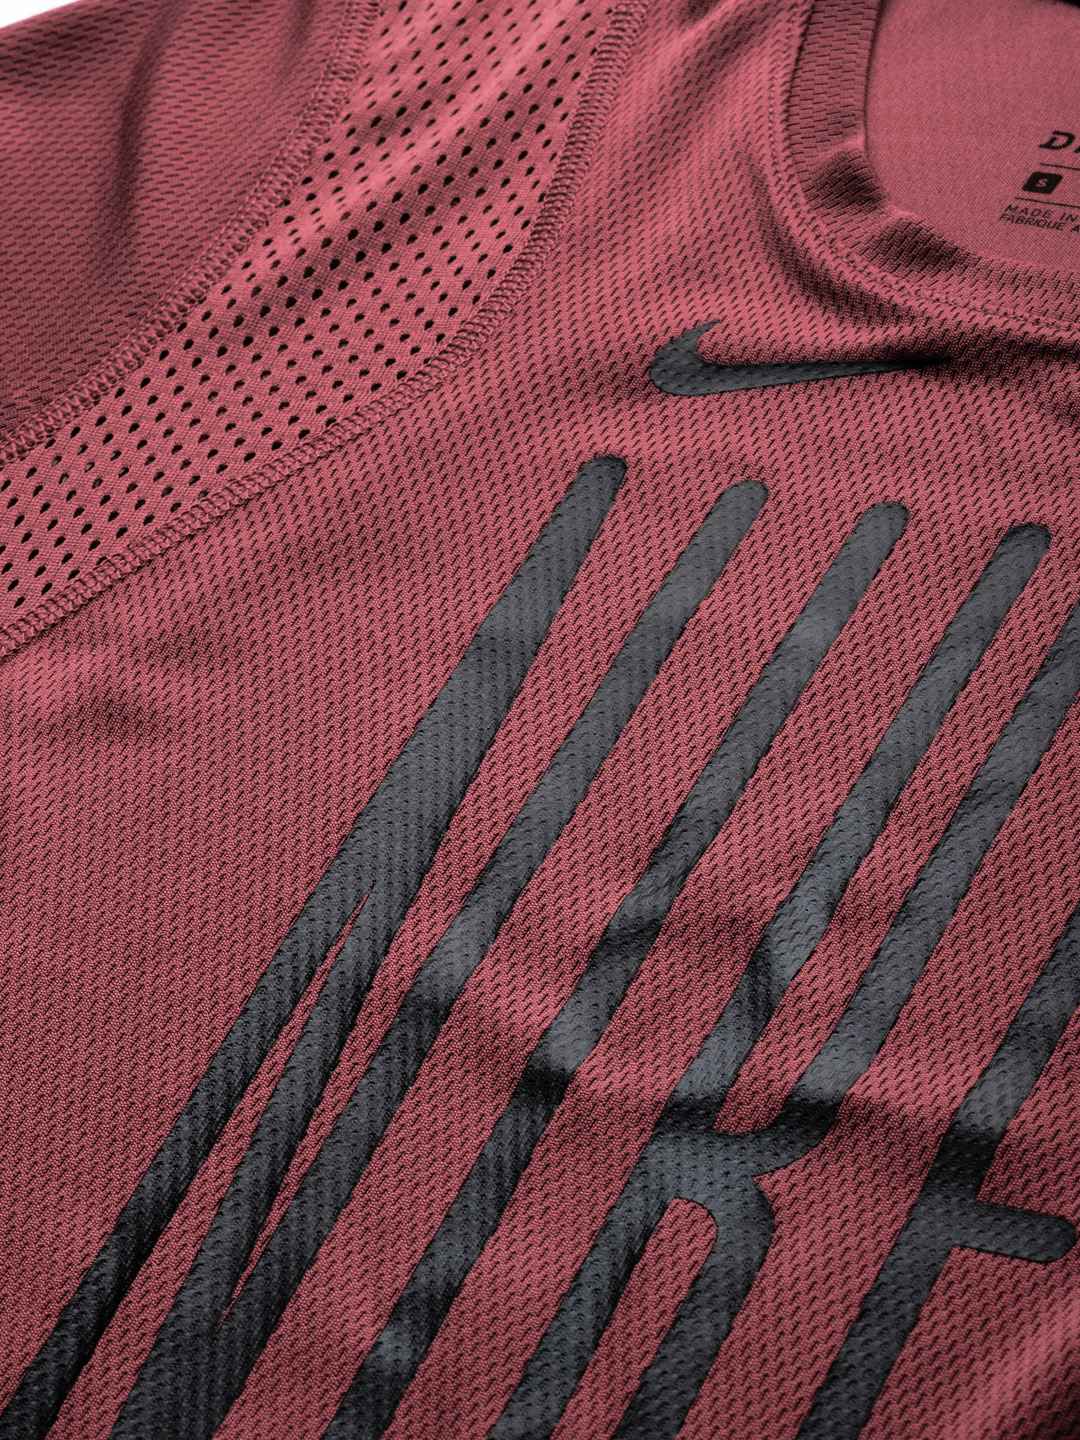 Nike-Women-Red-Printed-Top